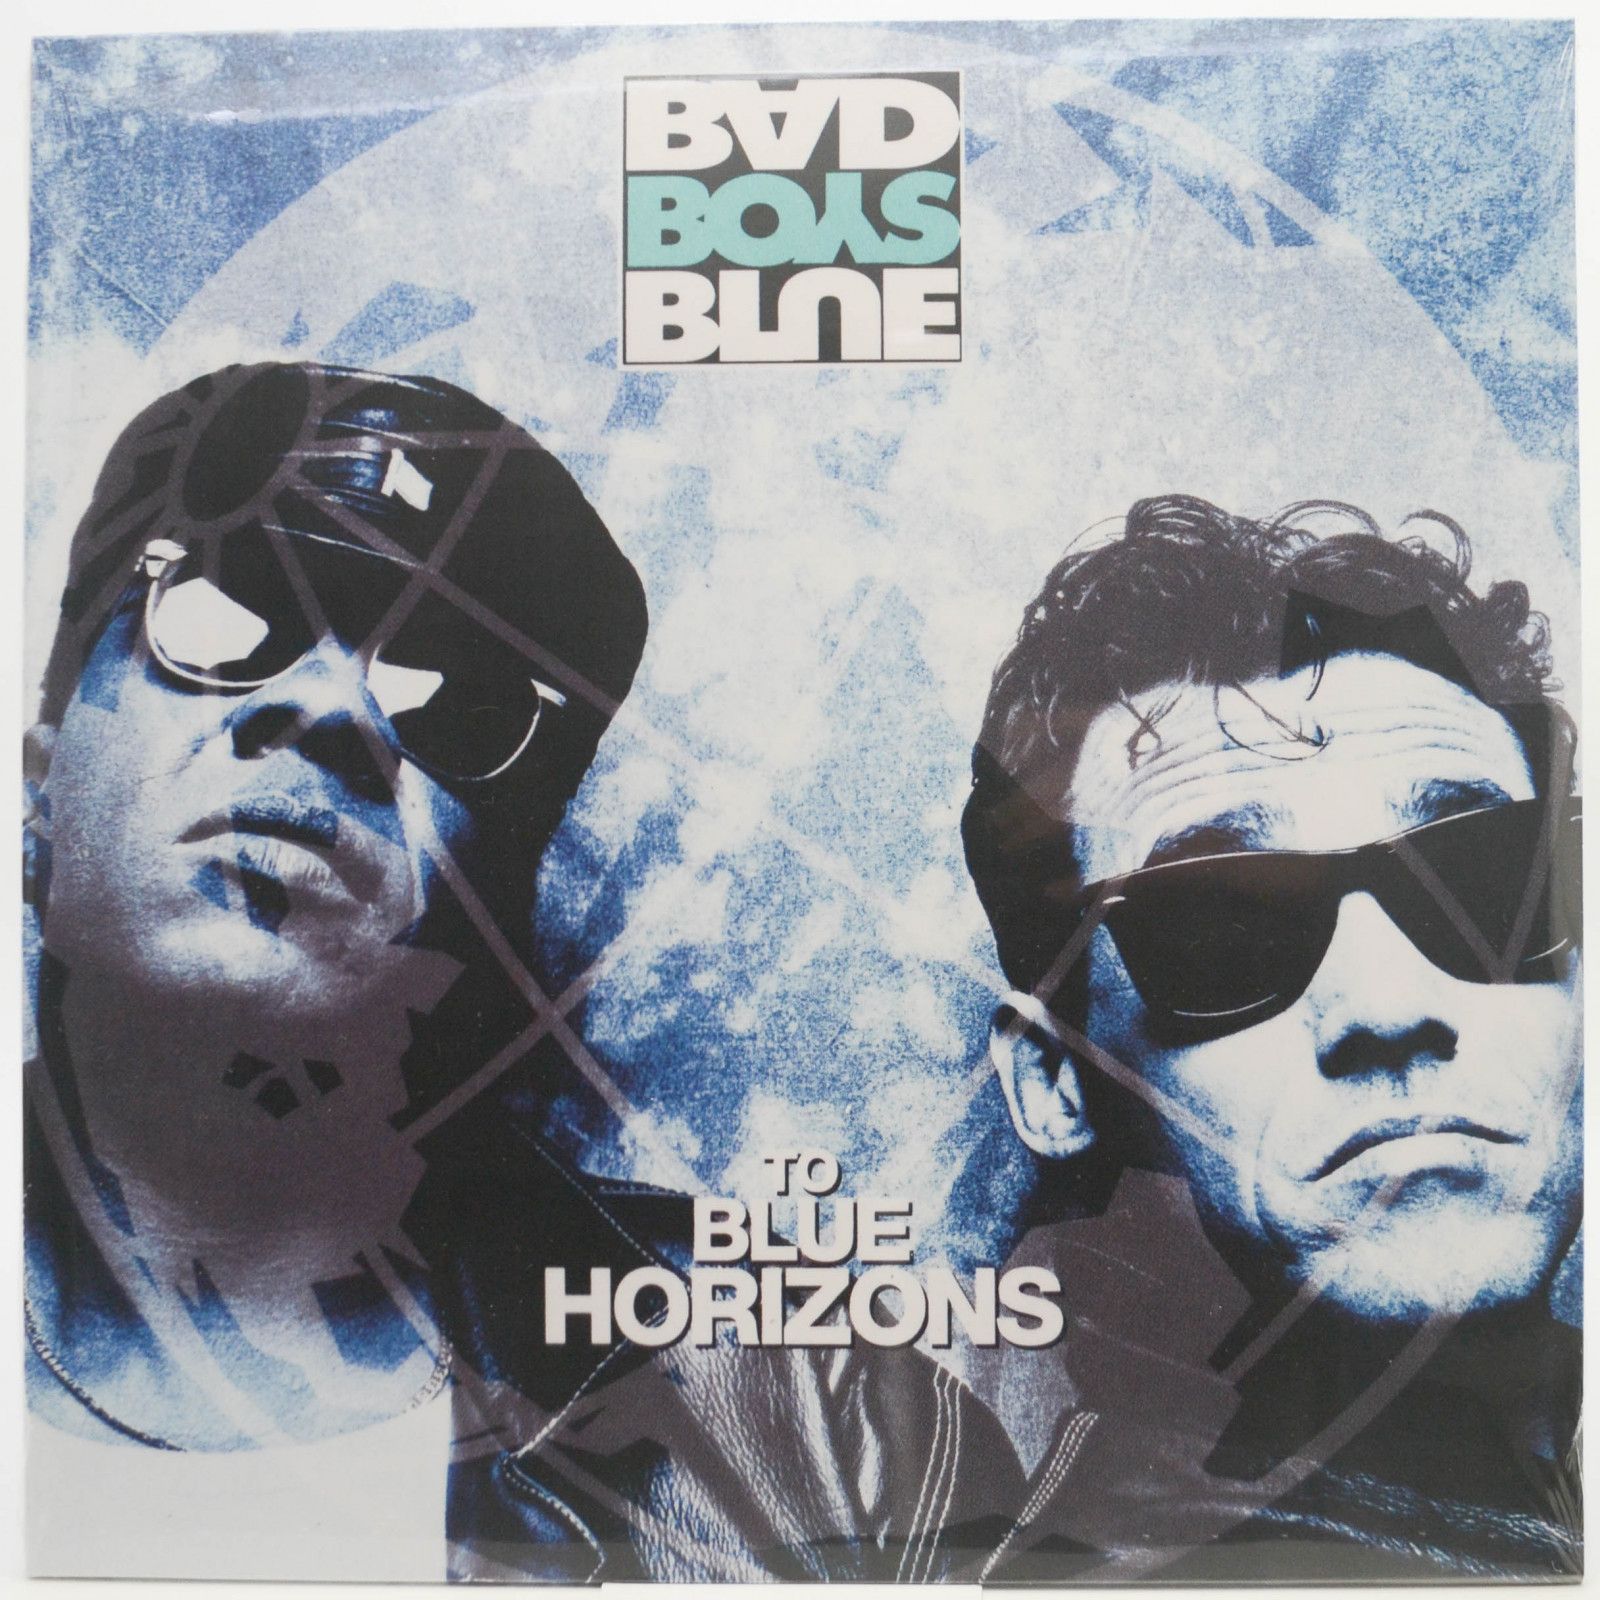 Bad Boys Blue — To Blue Horizons, 1984